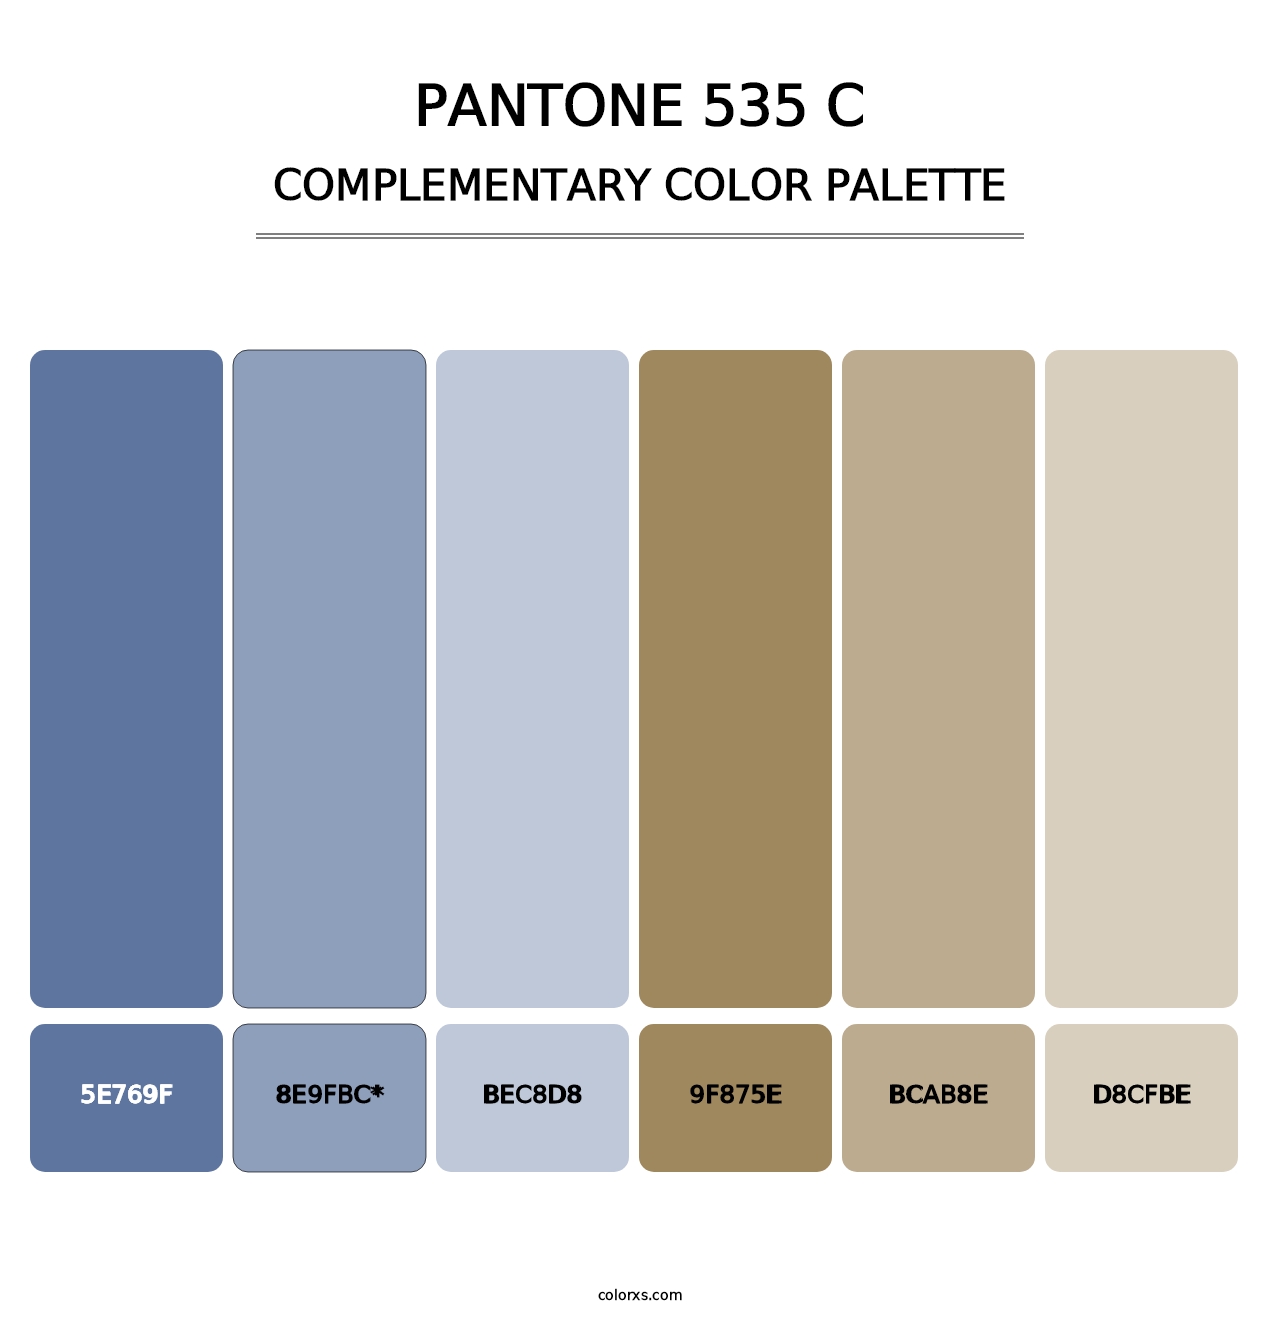 PANTONE 535 C - Complementary Color Palette